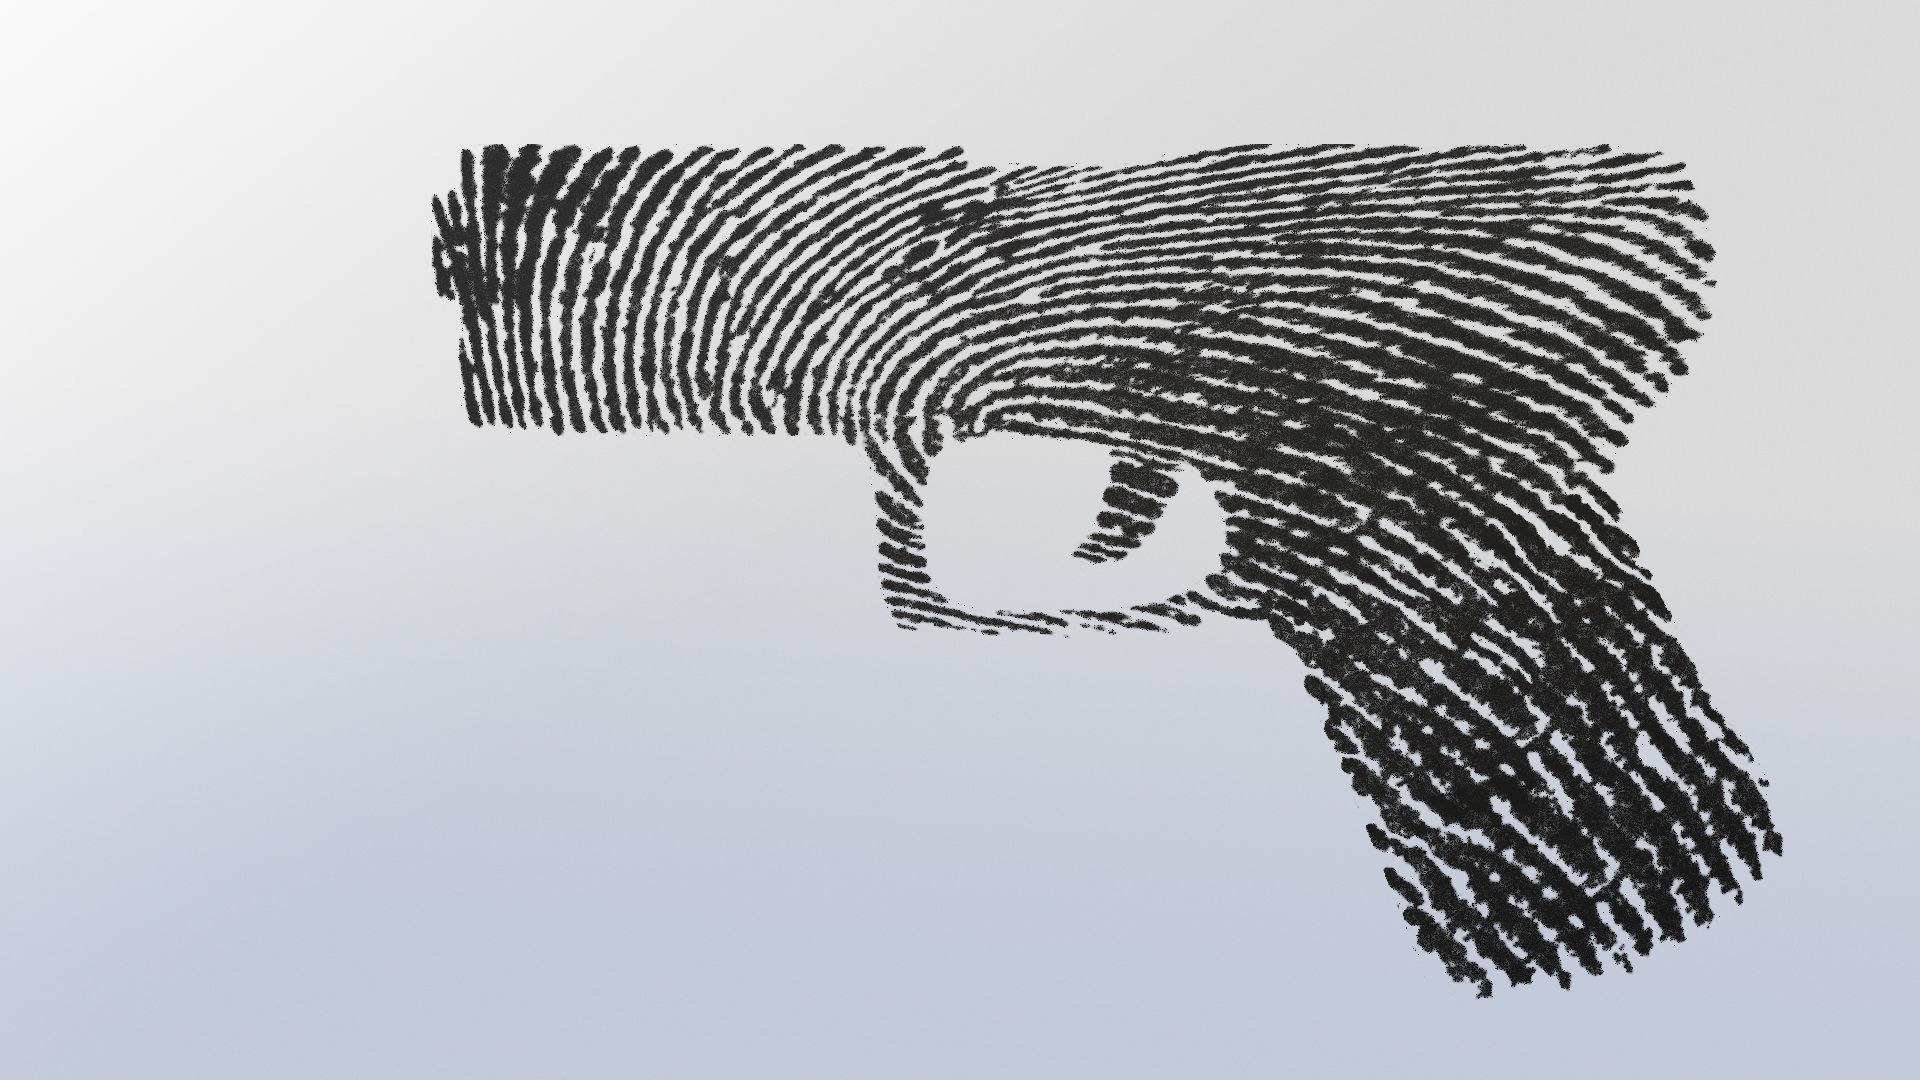 Illustration of a fingerprint shaped to resemble a handgun